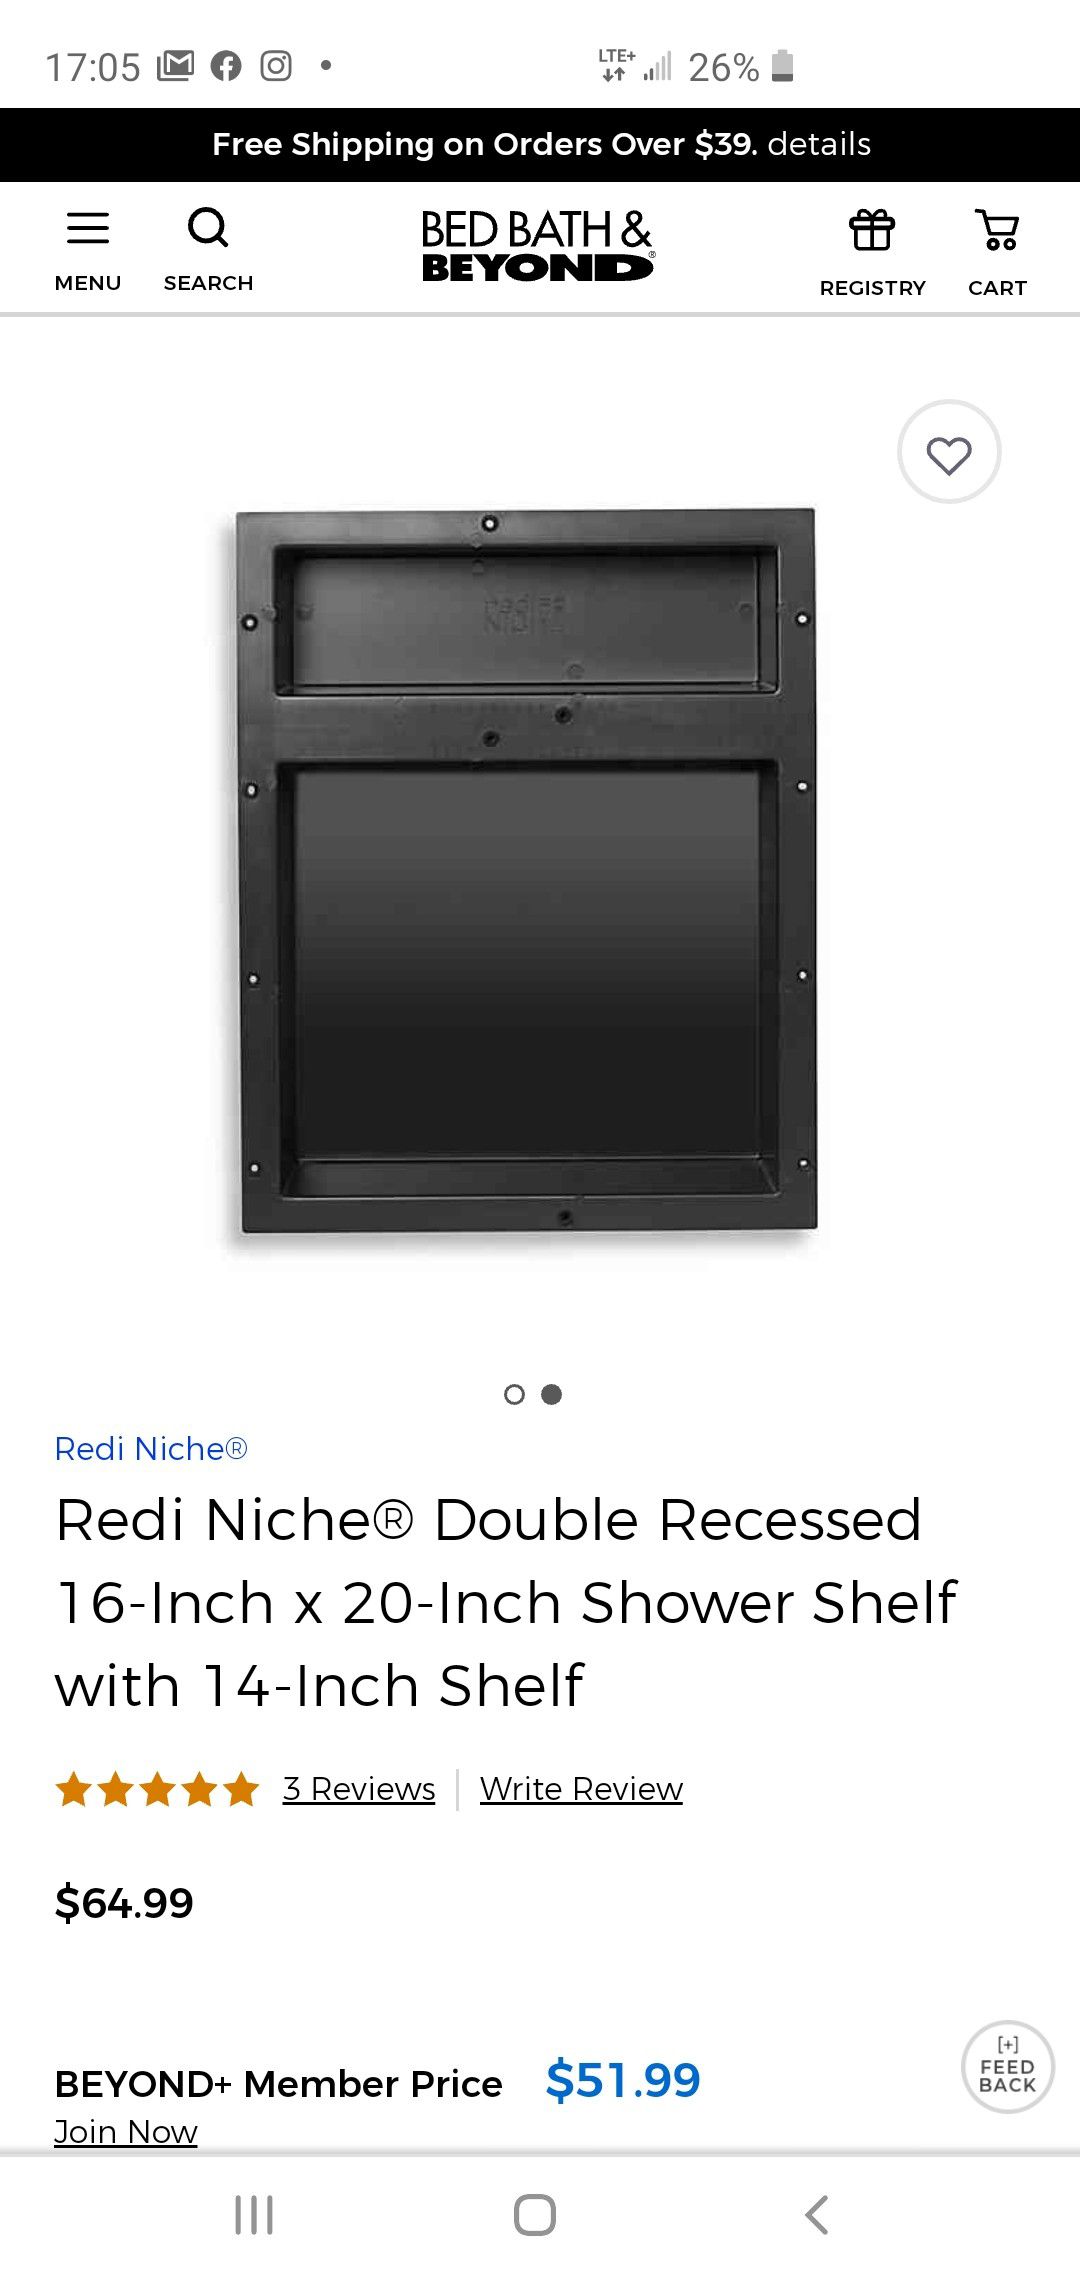 Redi Niche® Double Recessed 16-Inch x 20-Inch Shower Shelf with 14-Inch Shelf